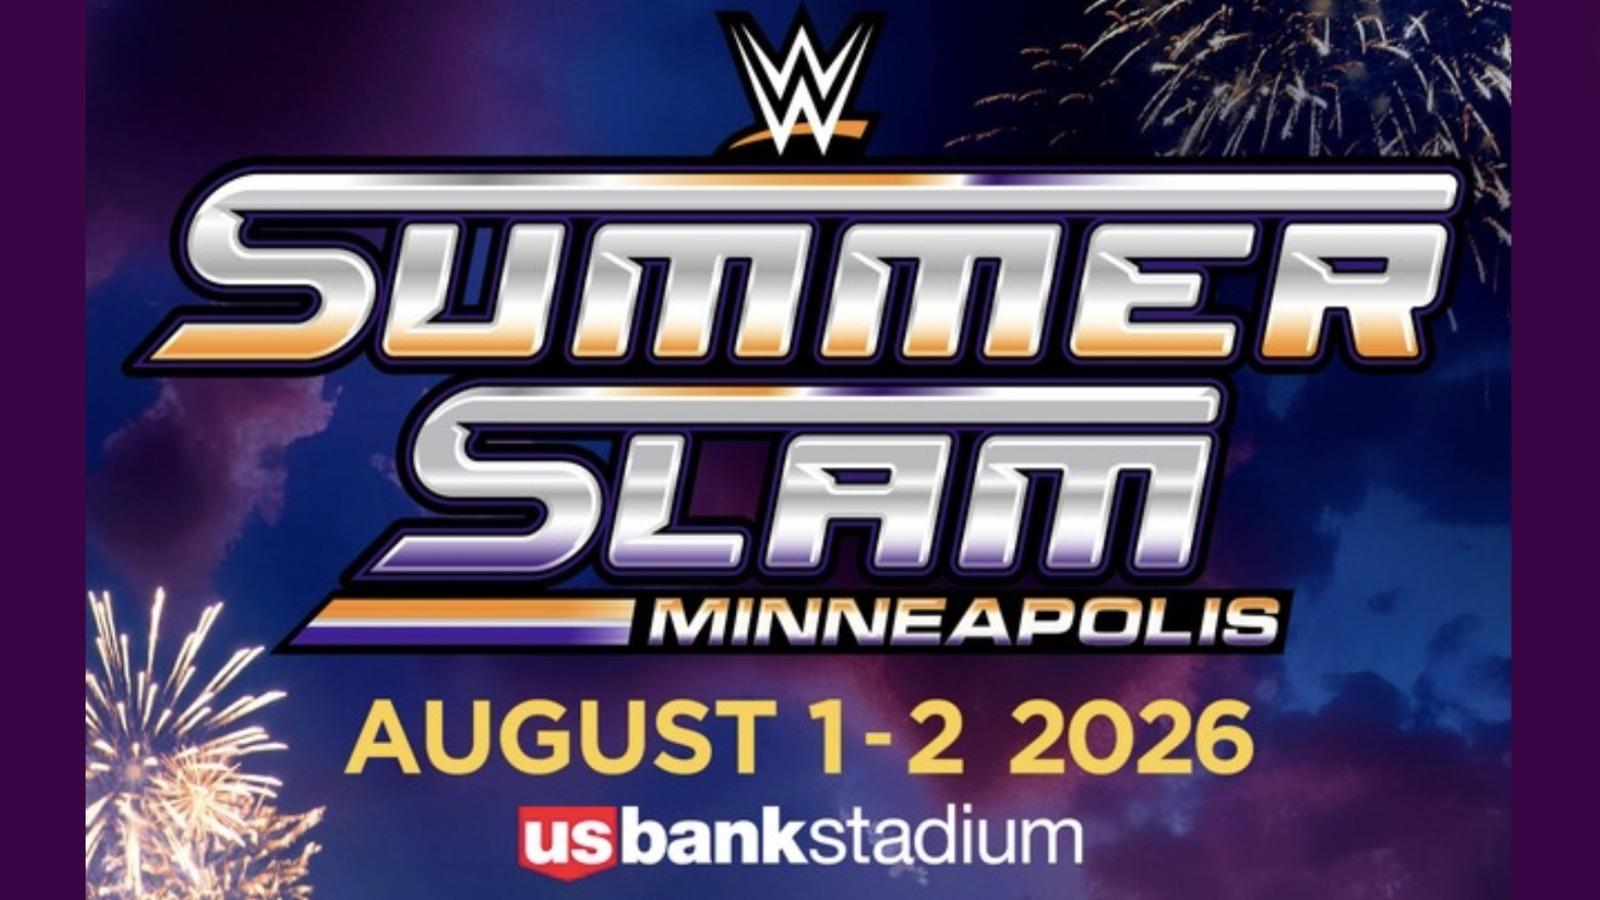 WWE is making a massive change to its prestigious SummerSlam event